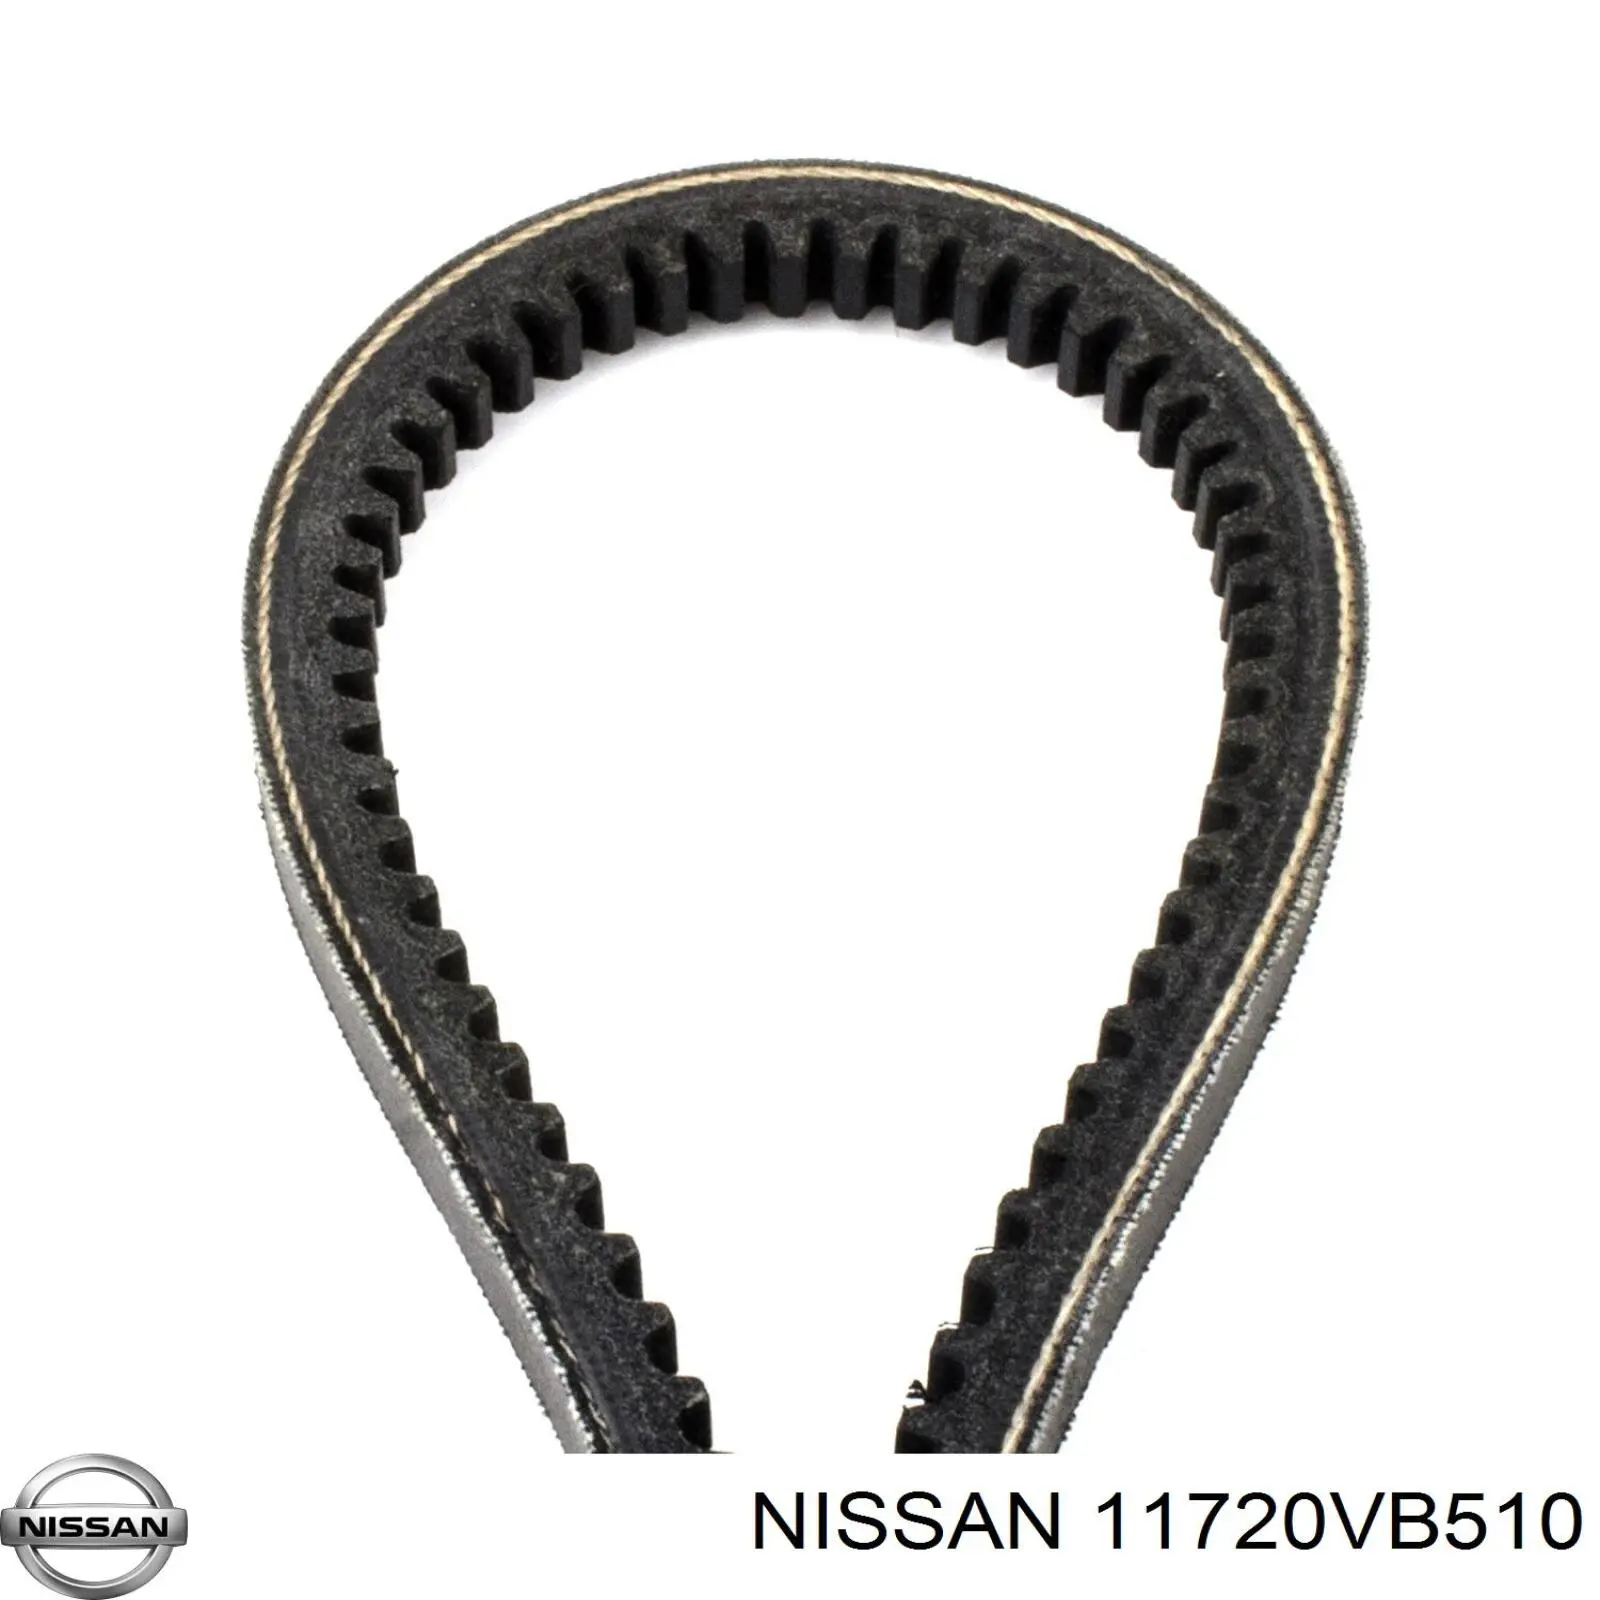 11720VB510 Nissan correa trapezoidal